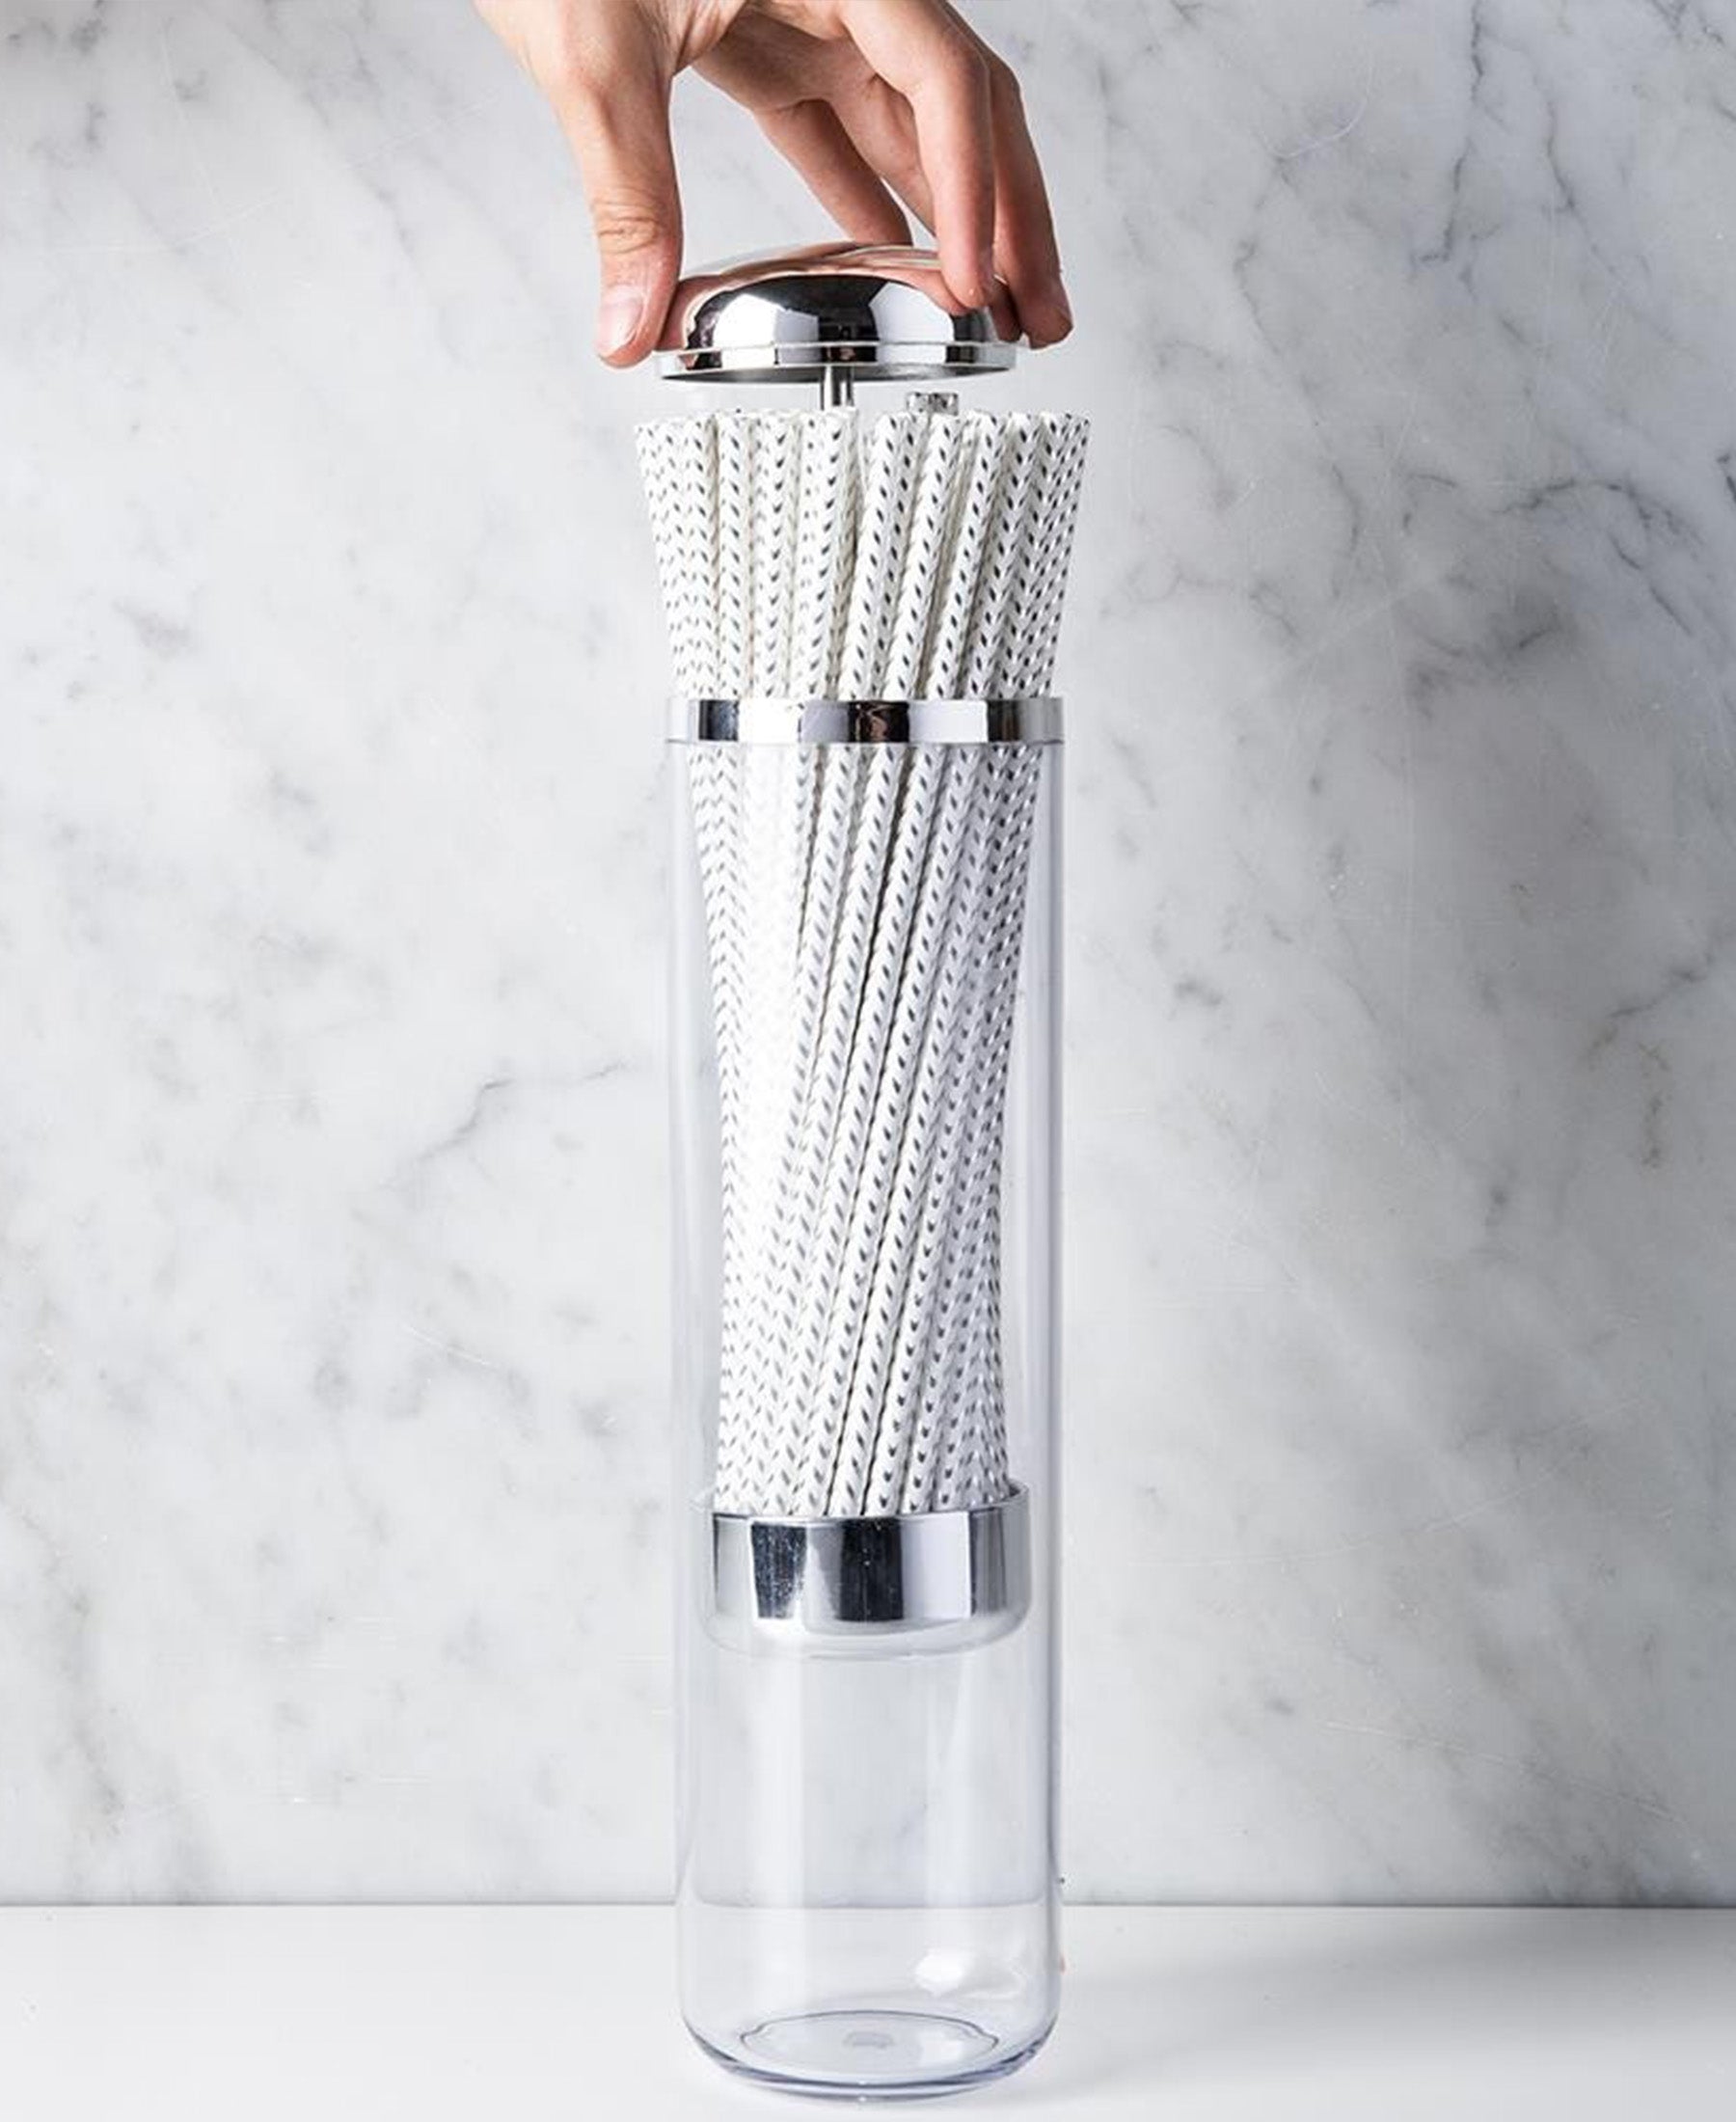 Joie Eco-Friendly Straw Dispenser with Paper Straw - White